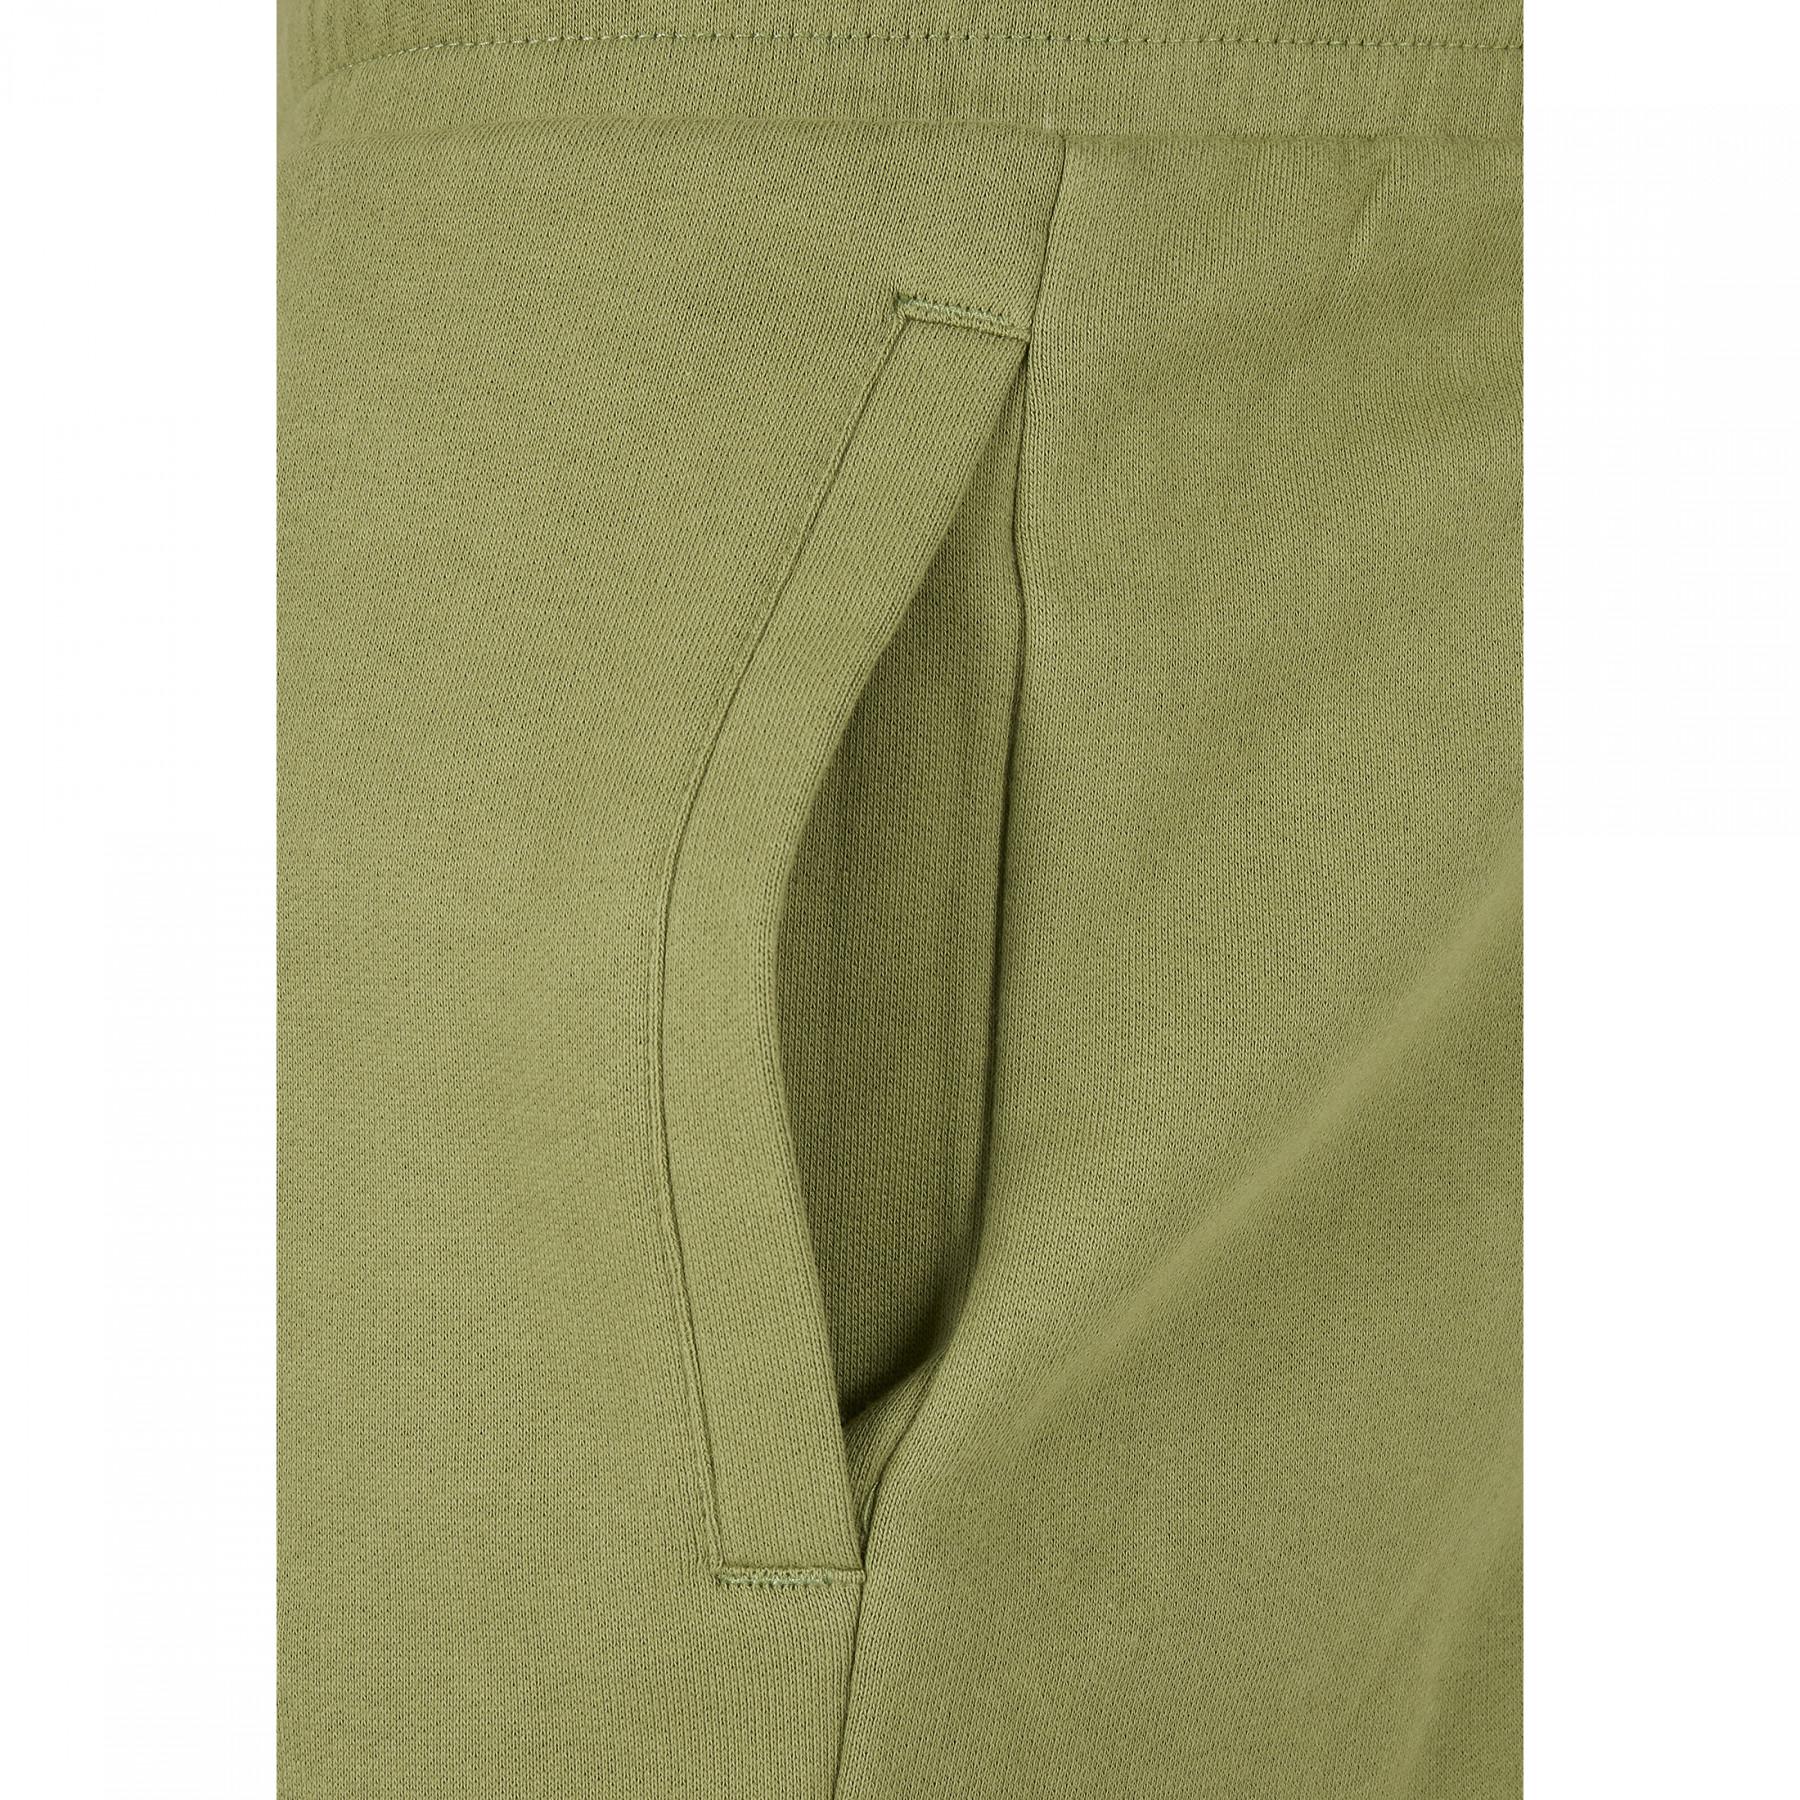 Pantalones Urban Classics organic entrejambe basse